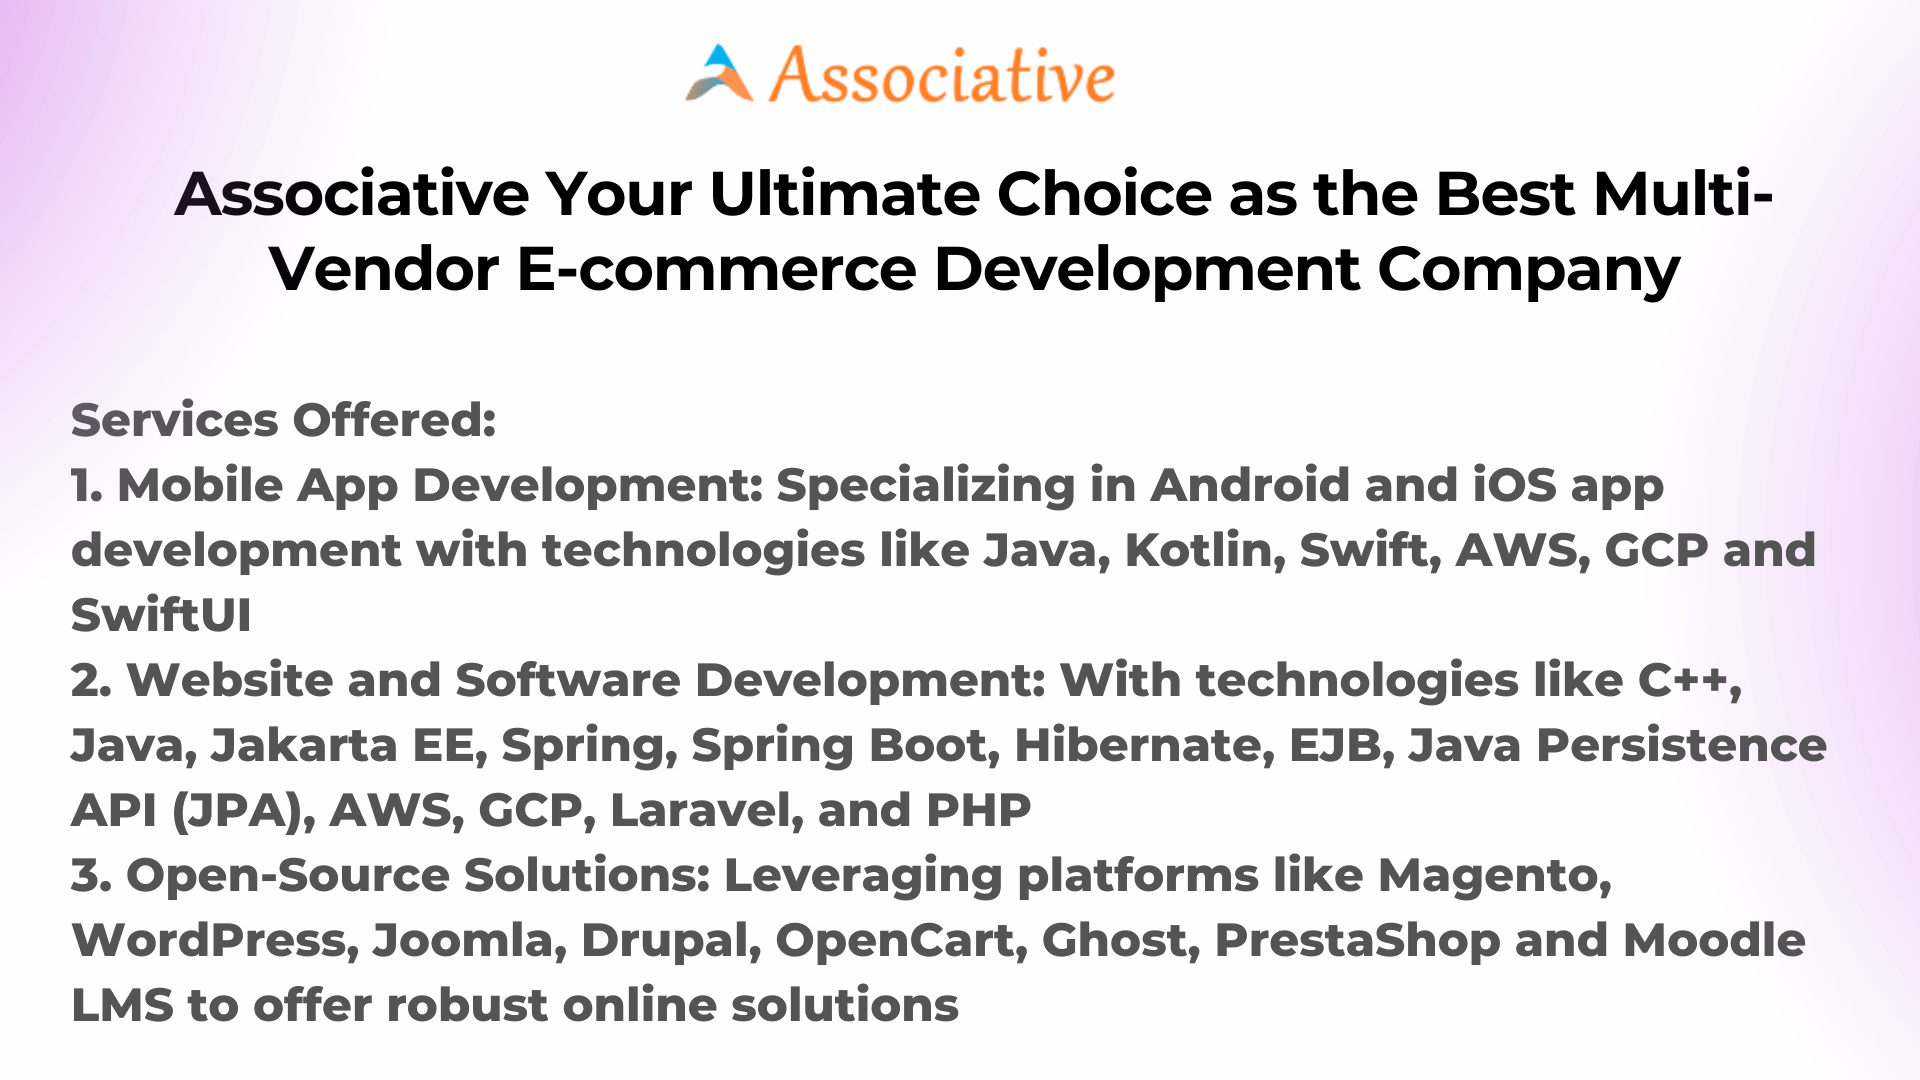 Associative Your Ultimate Choice as the Best Multi-Vendor E-commerce Development Company